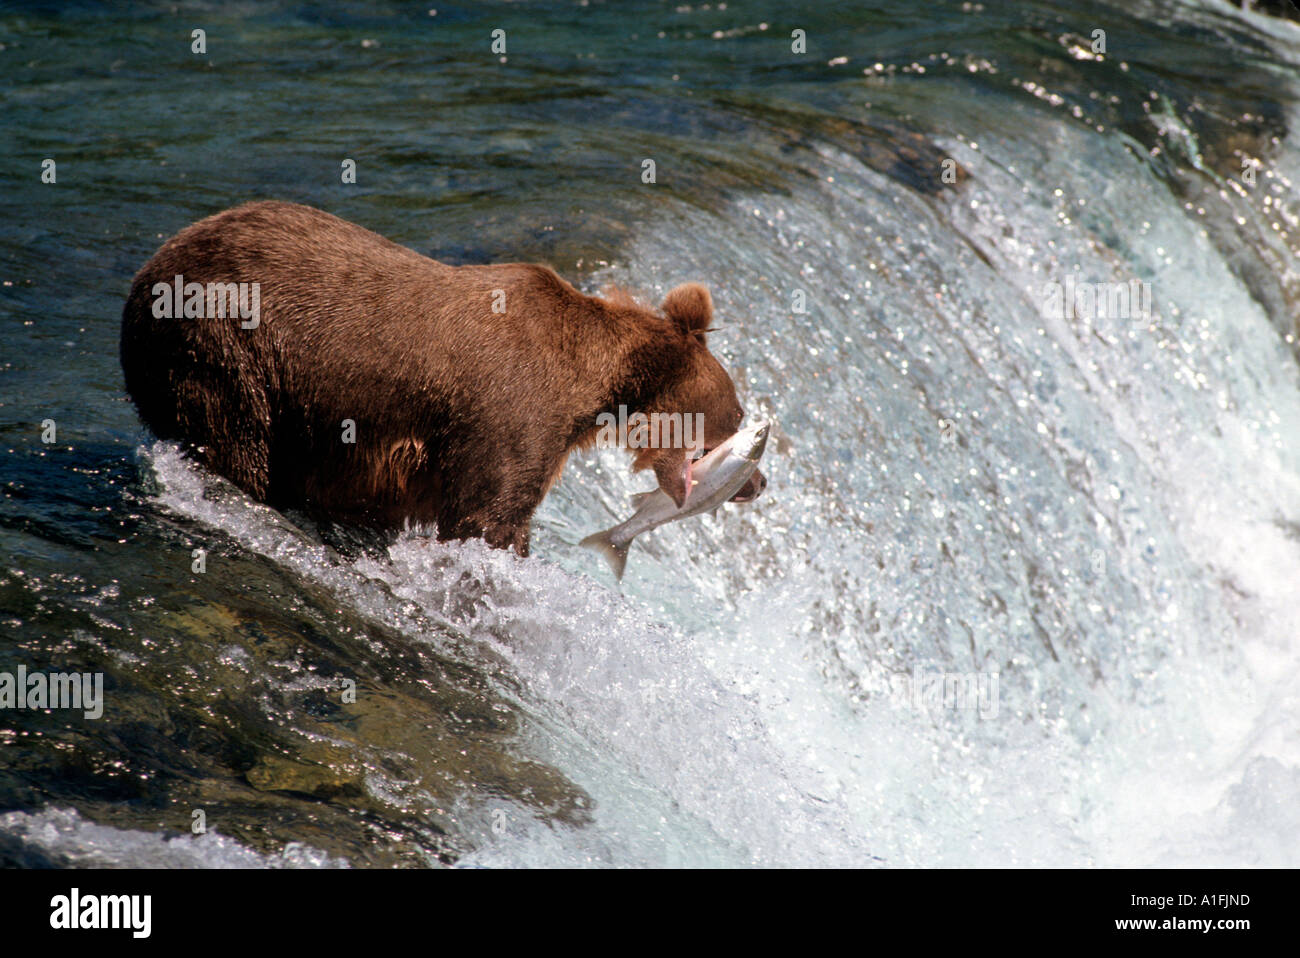 Brown Bear, Alaska Grizzly, Grizzly Bear, ursus arctos horribilis, in Katmai National Park, Shot in the wild. Stock Photo